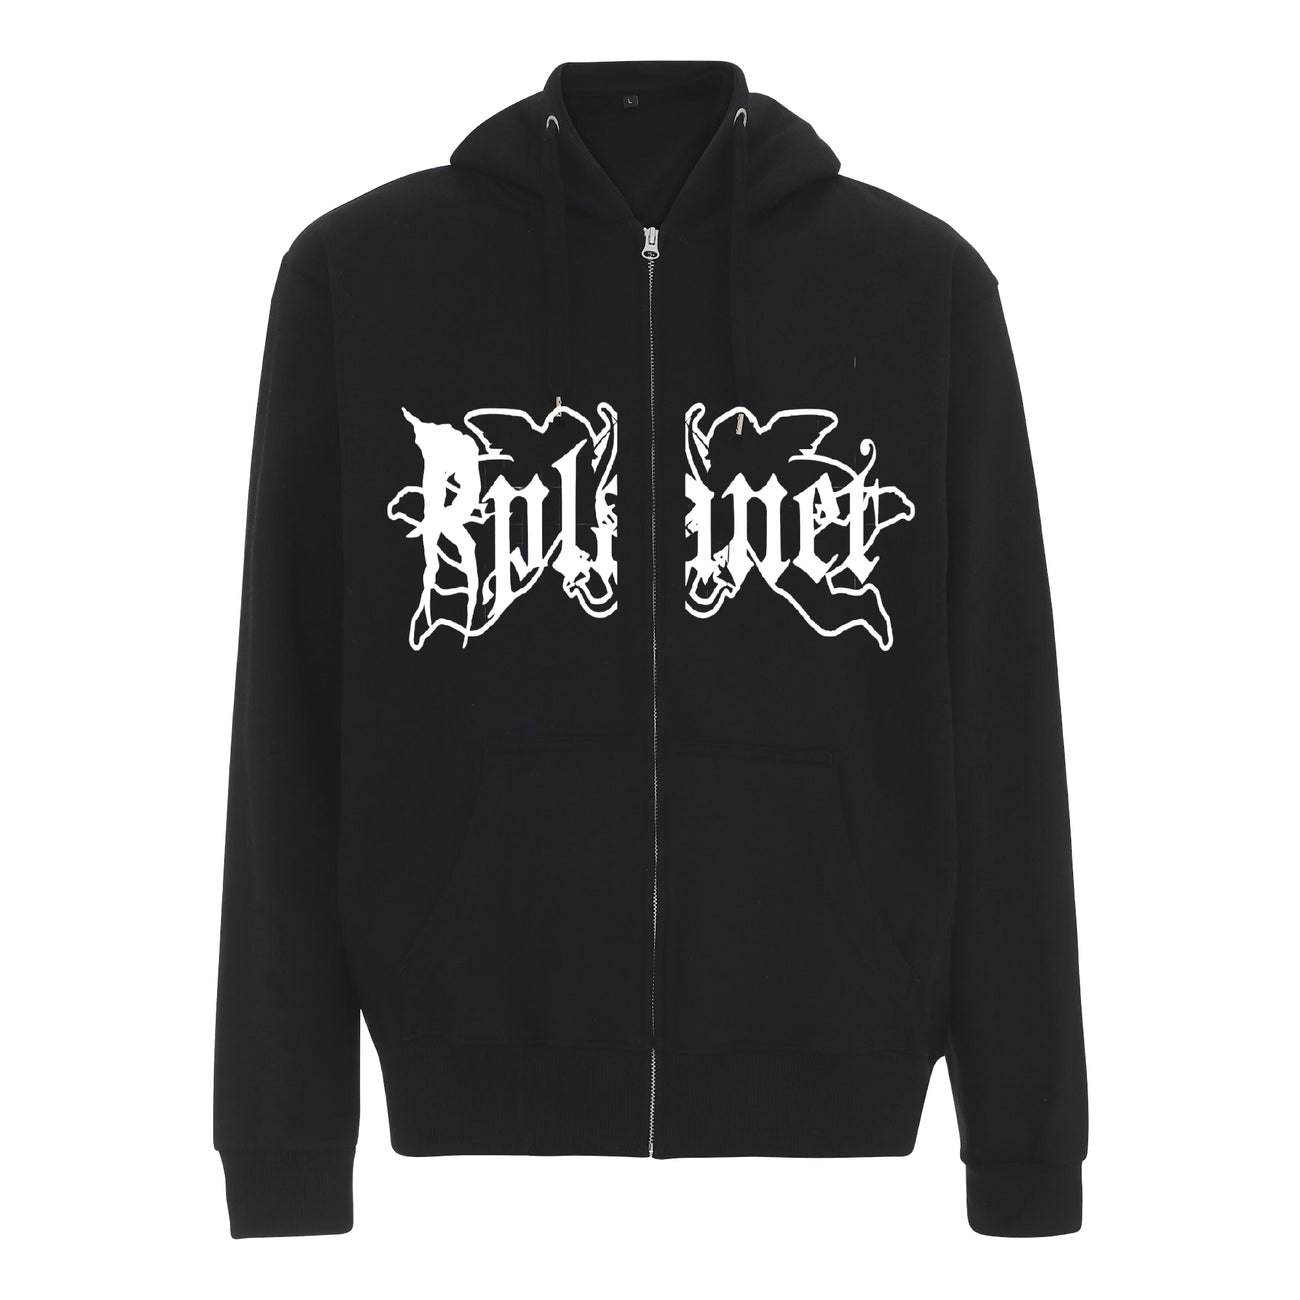 Rplanet black zipper hoodie white color logo